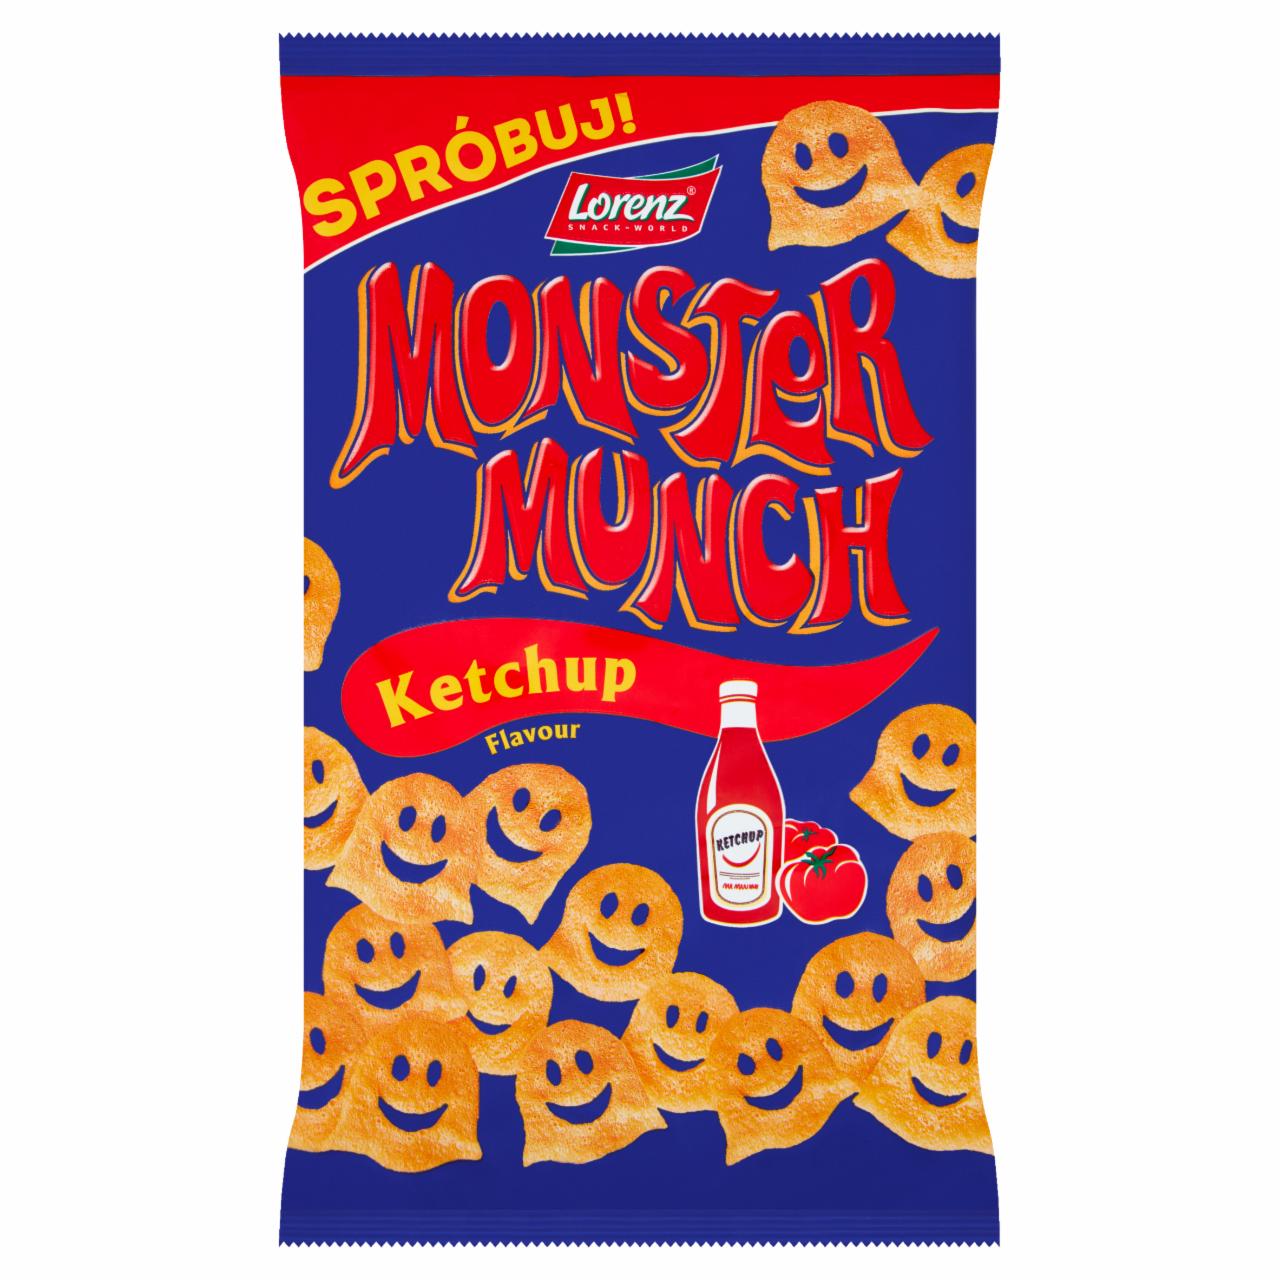 Zdjęcia - Monster Munch Chrupki ziemniaczane ketchup 50 g